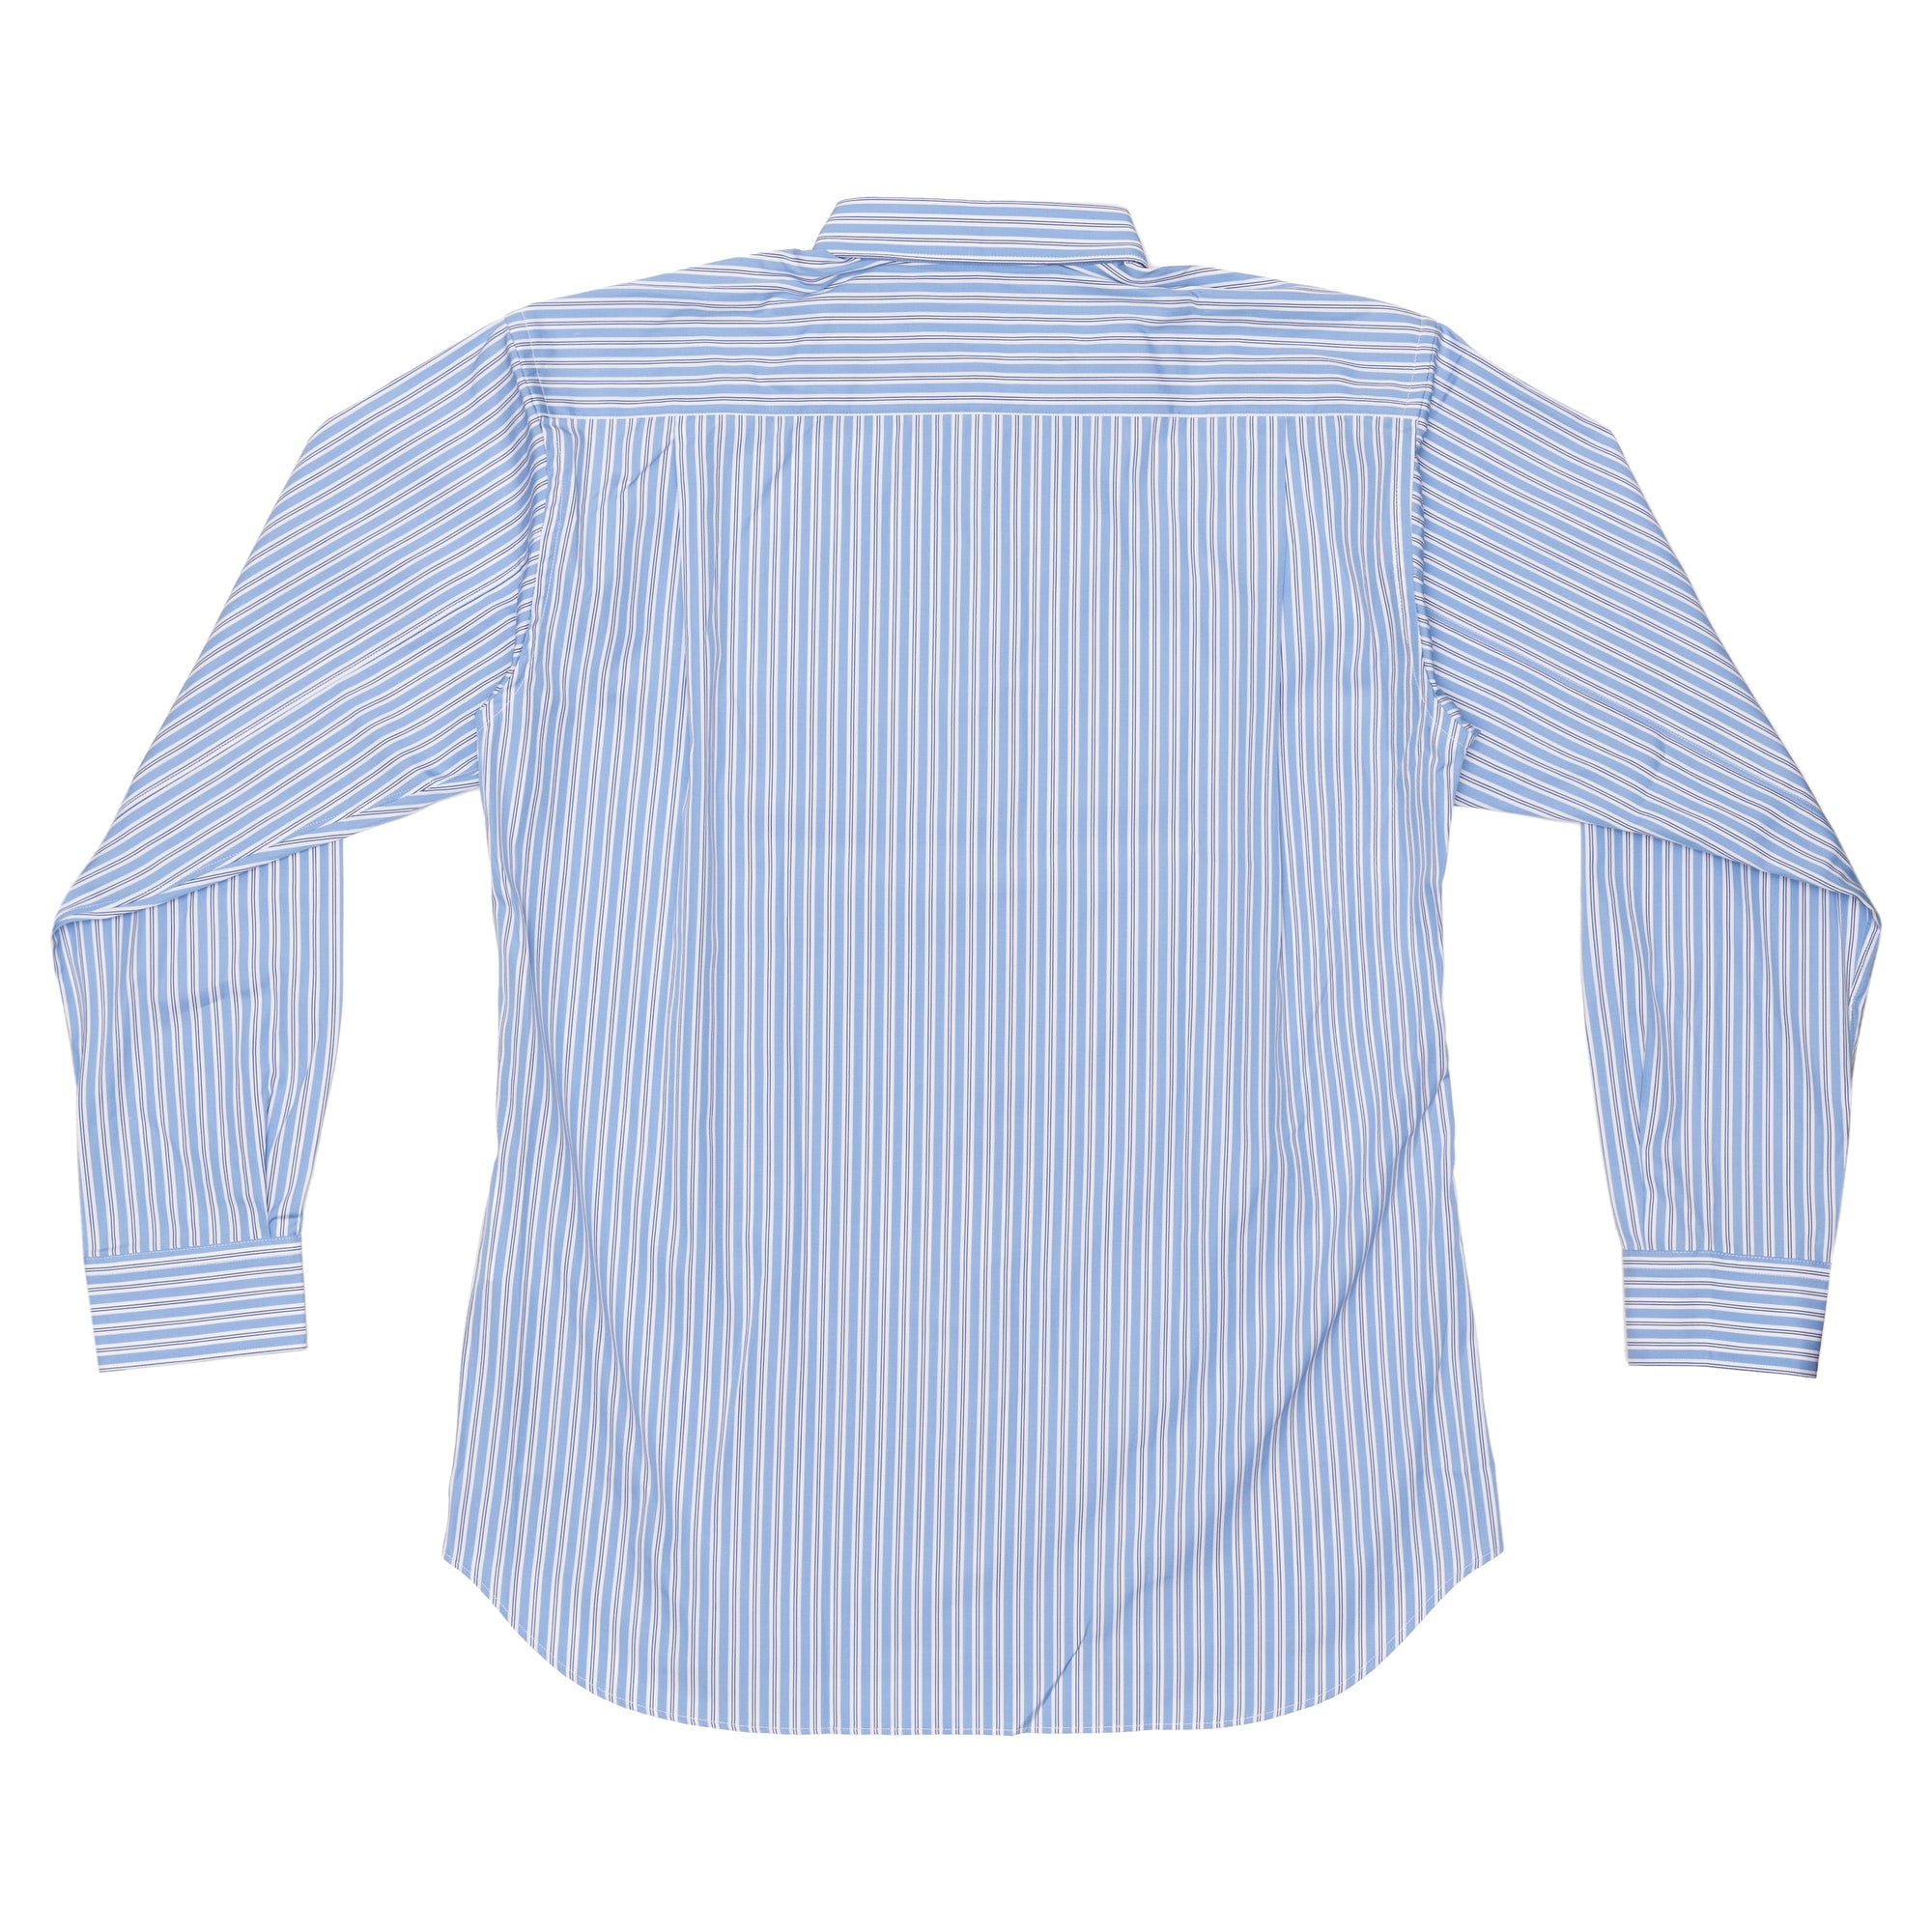 CDG SHIRT FOREVER - Yarn Dyed Cotton Poplin Narrow Classic Shirt - (Stripe11) view 2